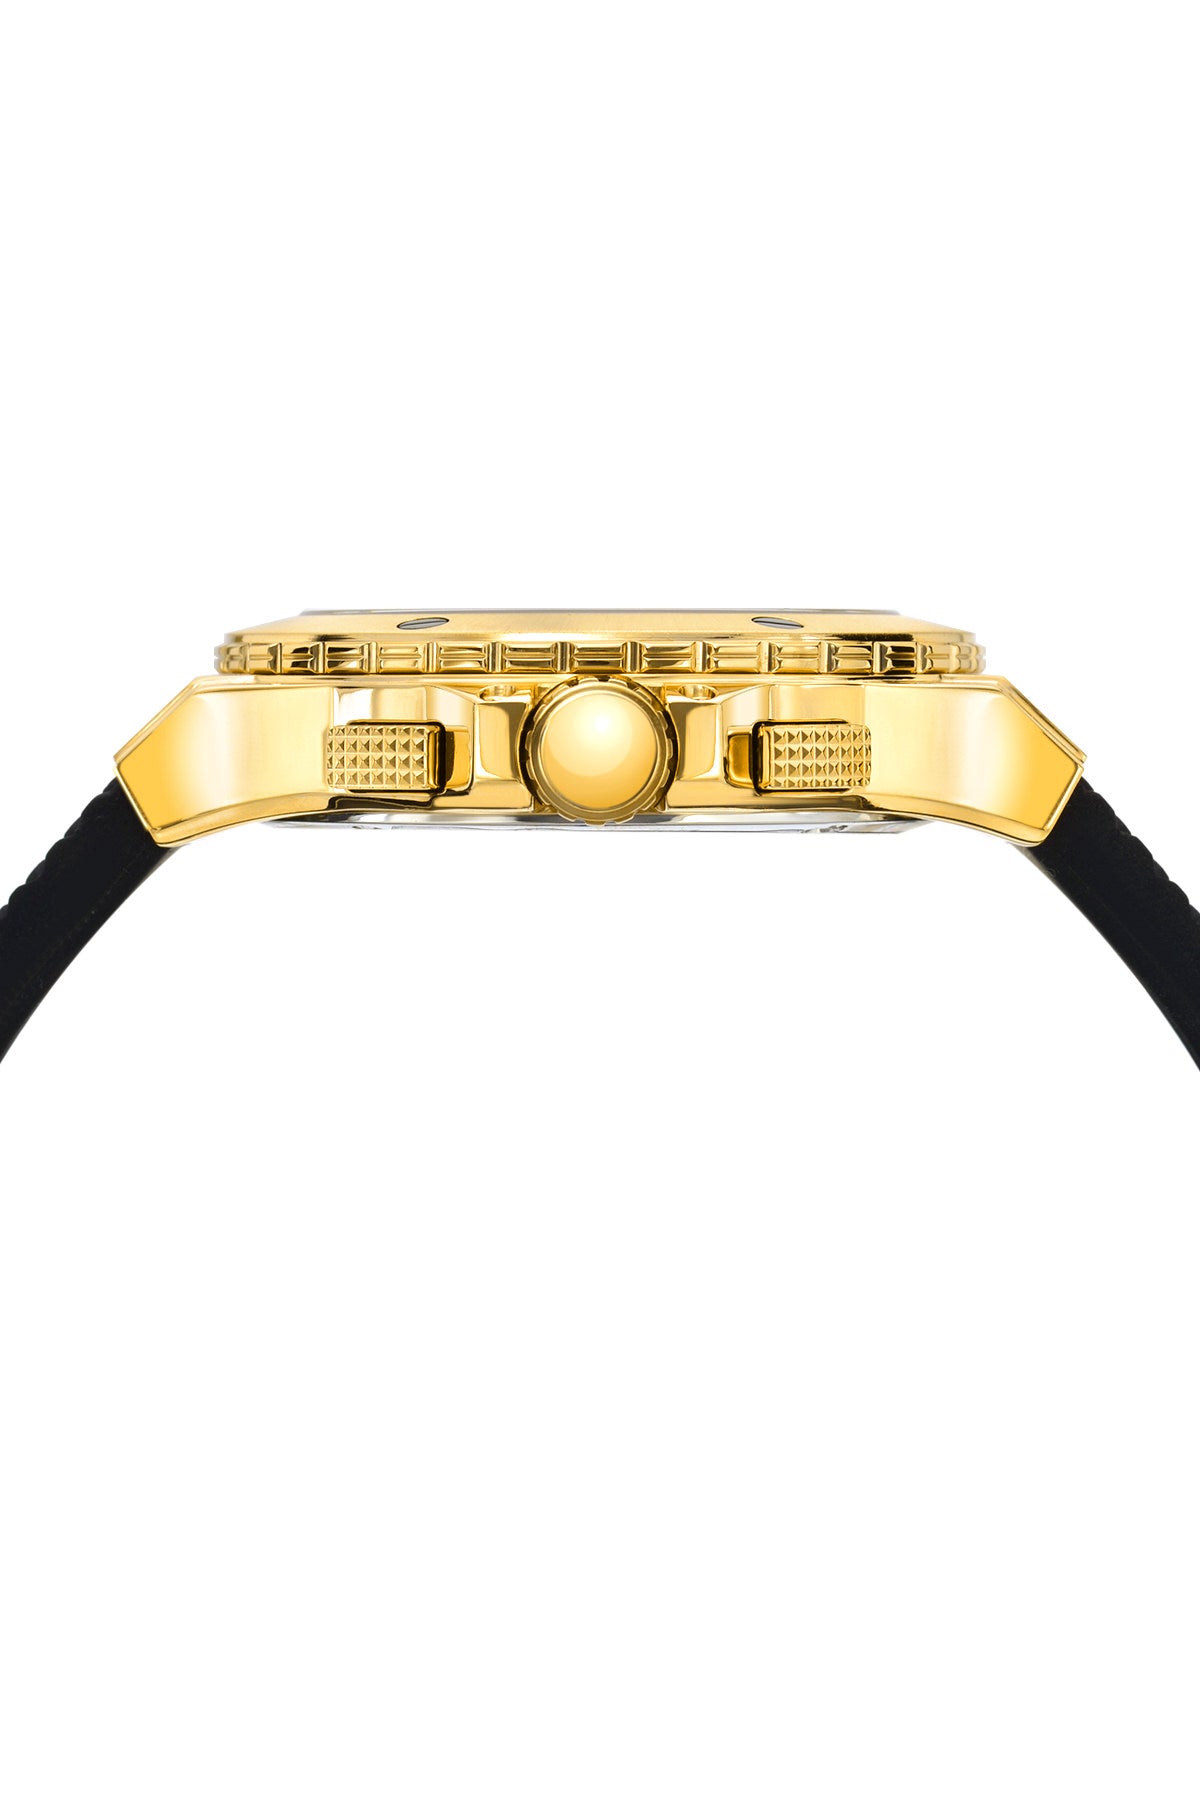 Porsamo Bleu Marcus luxury chronograph men's watch, silicone strap, gold, black 652AMAR